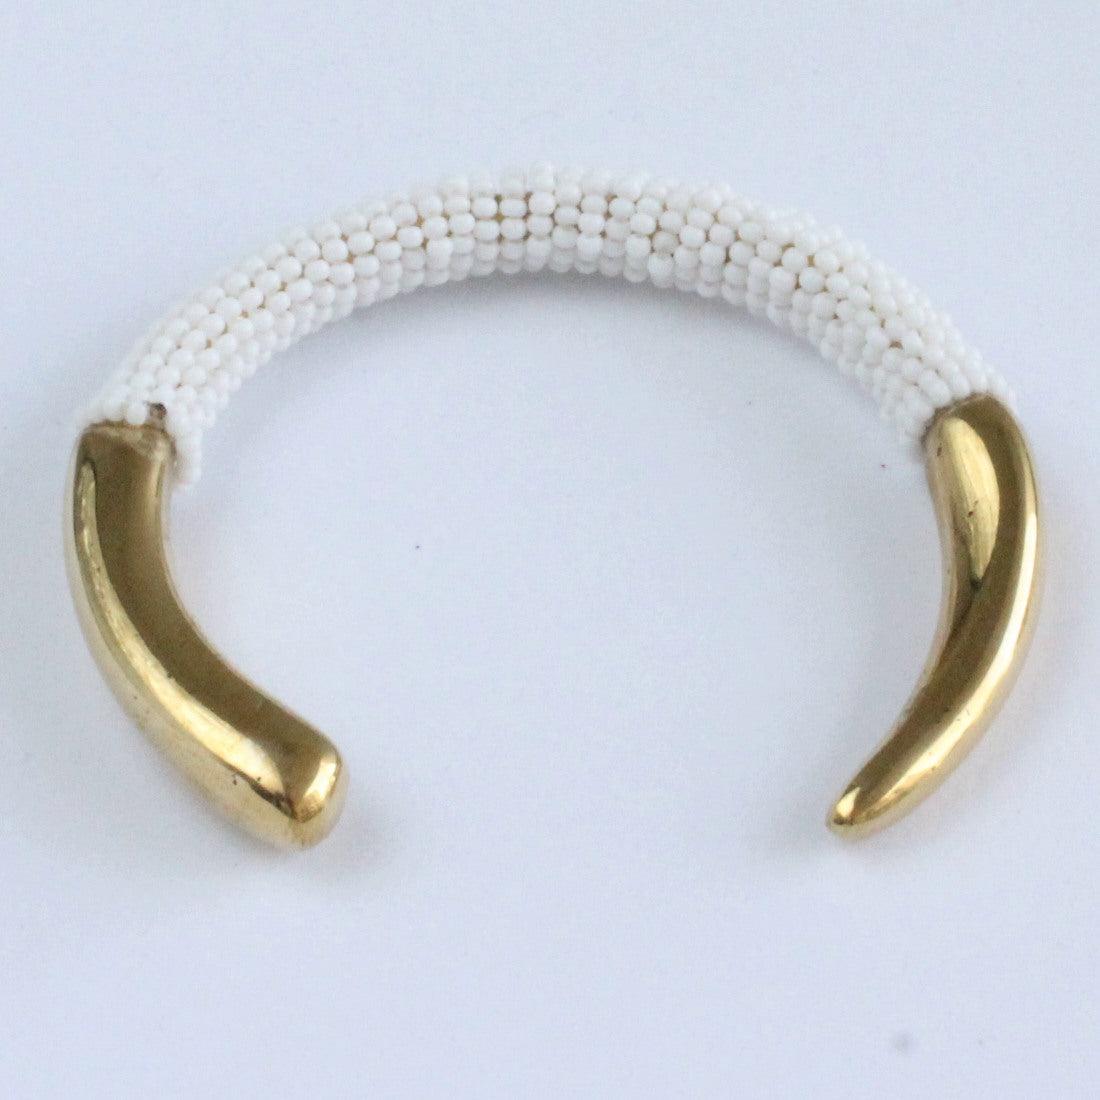 African handmade brass bracelet with white beads